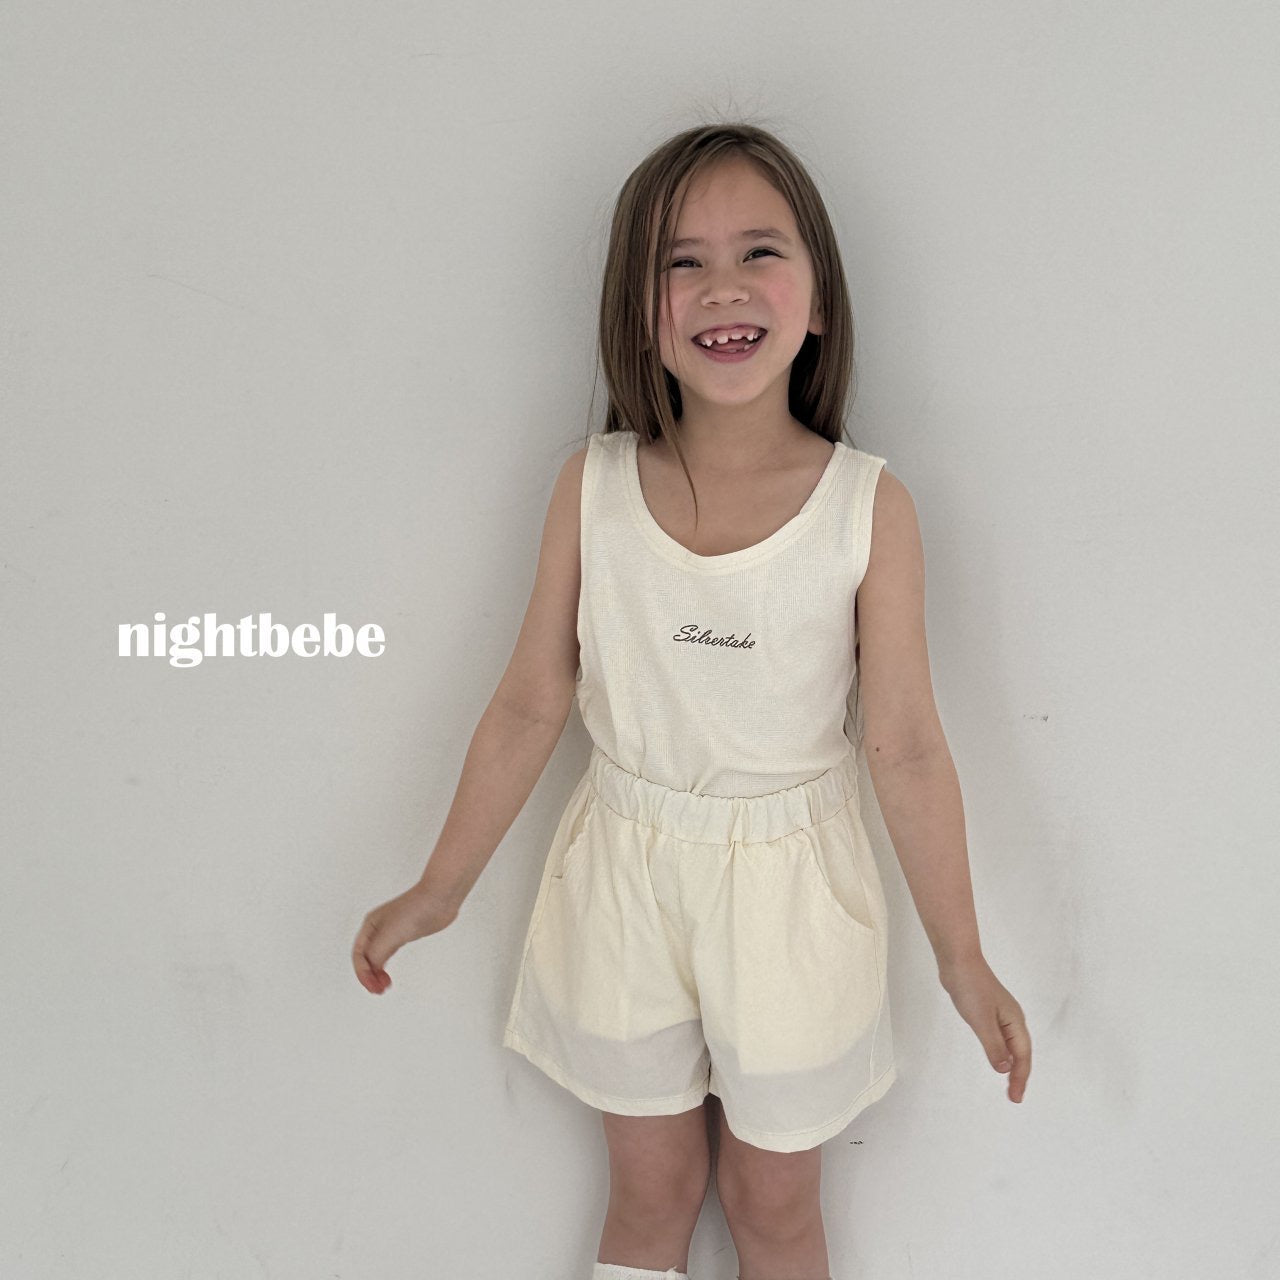 Nightbebe nightbebe Rustic shorts (kids 80-120cm)